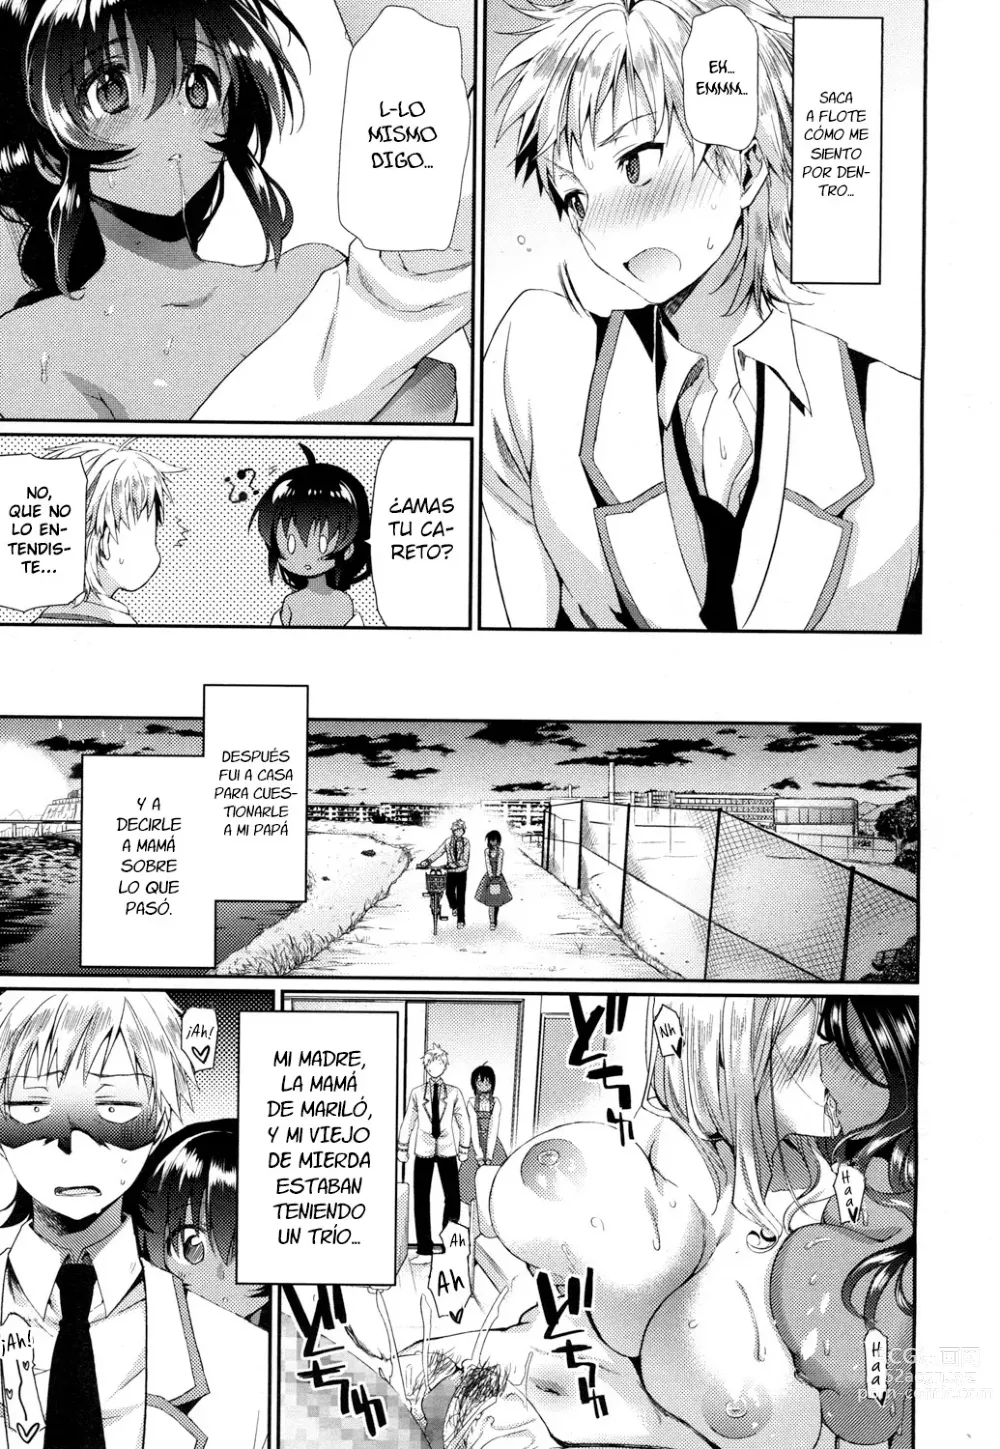 Page 21 of manga Te amo, mi amor.